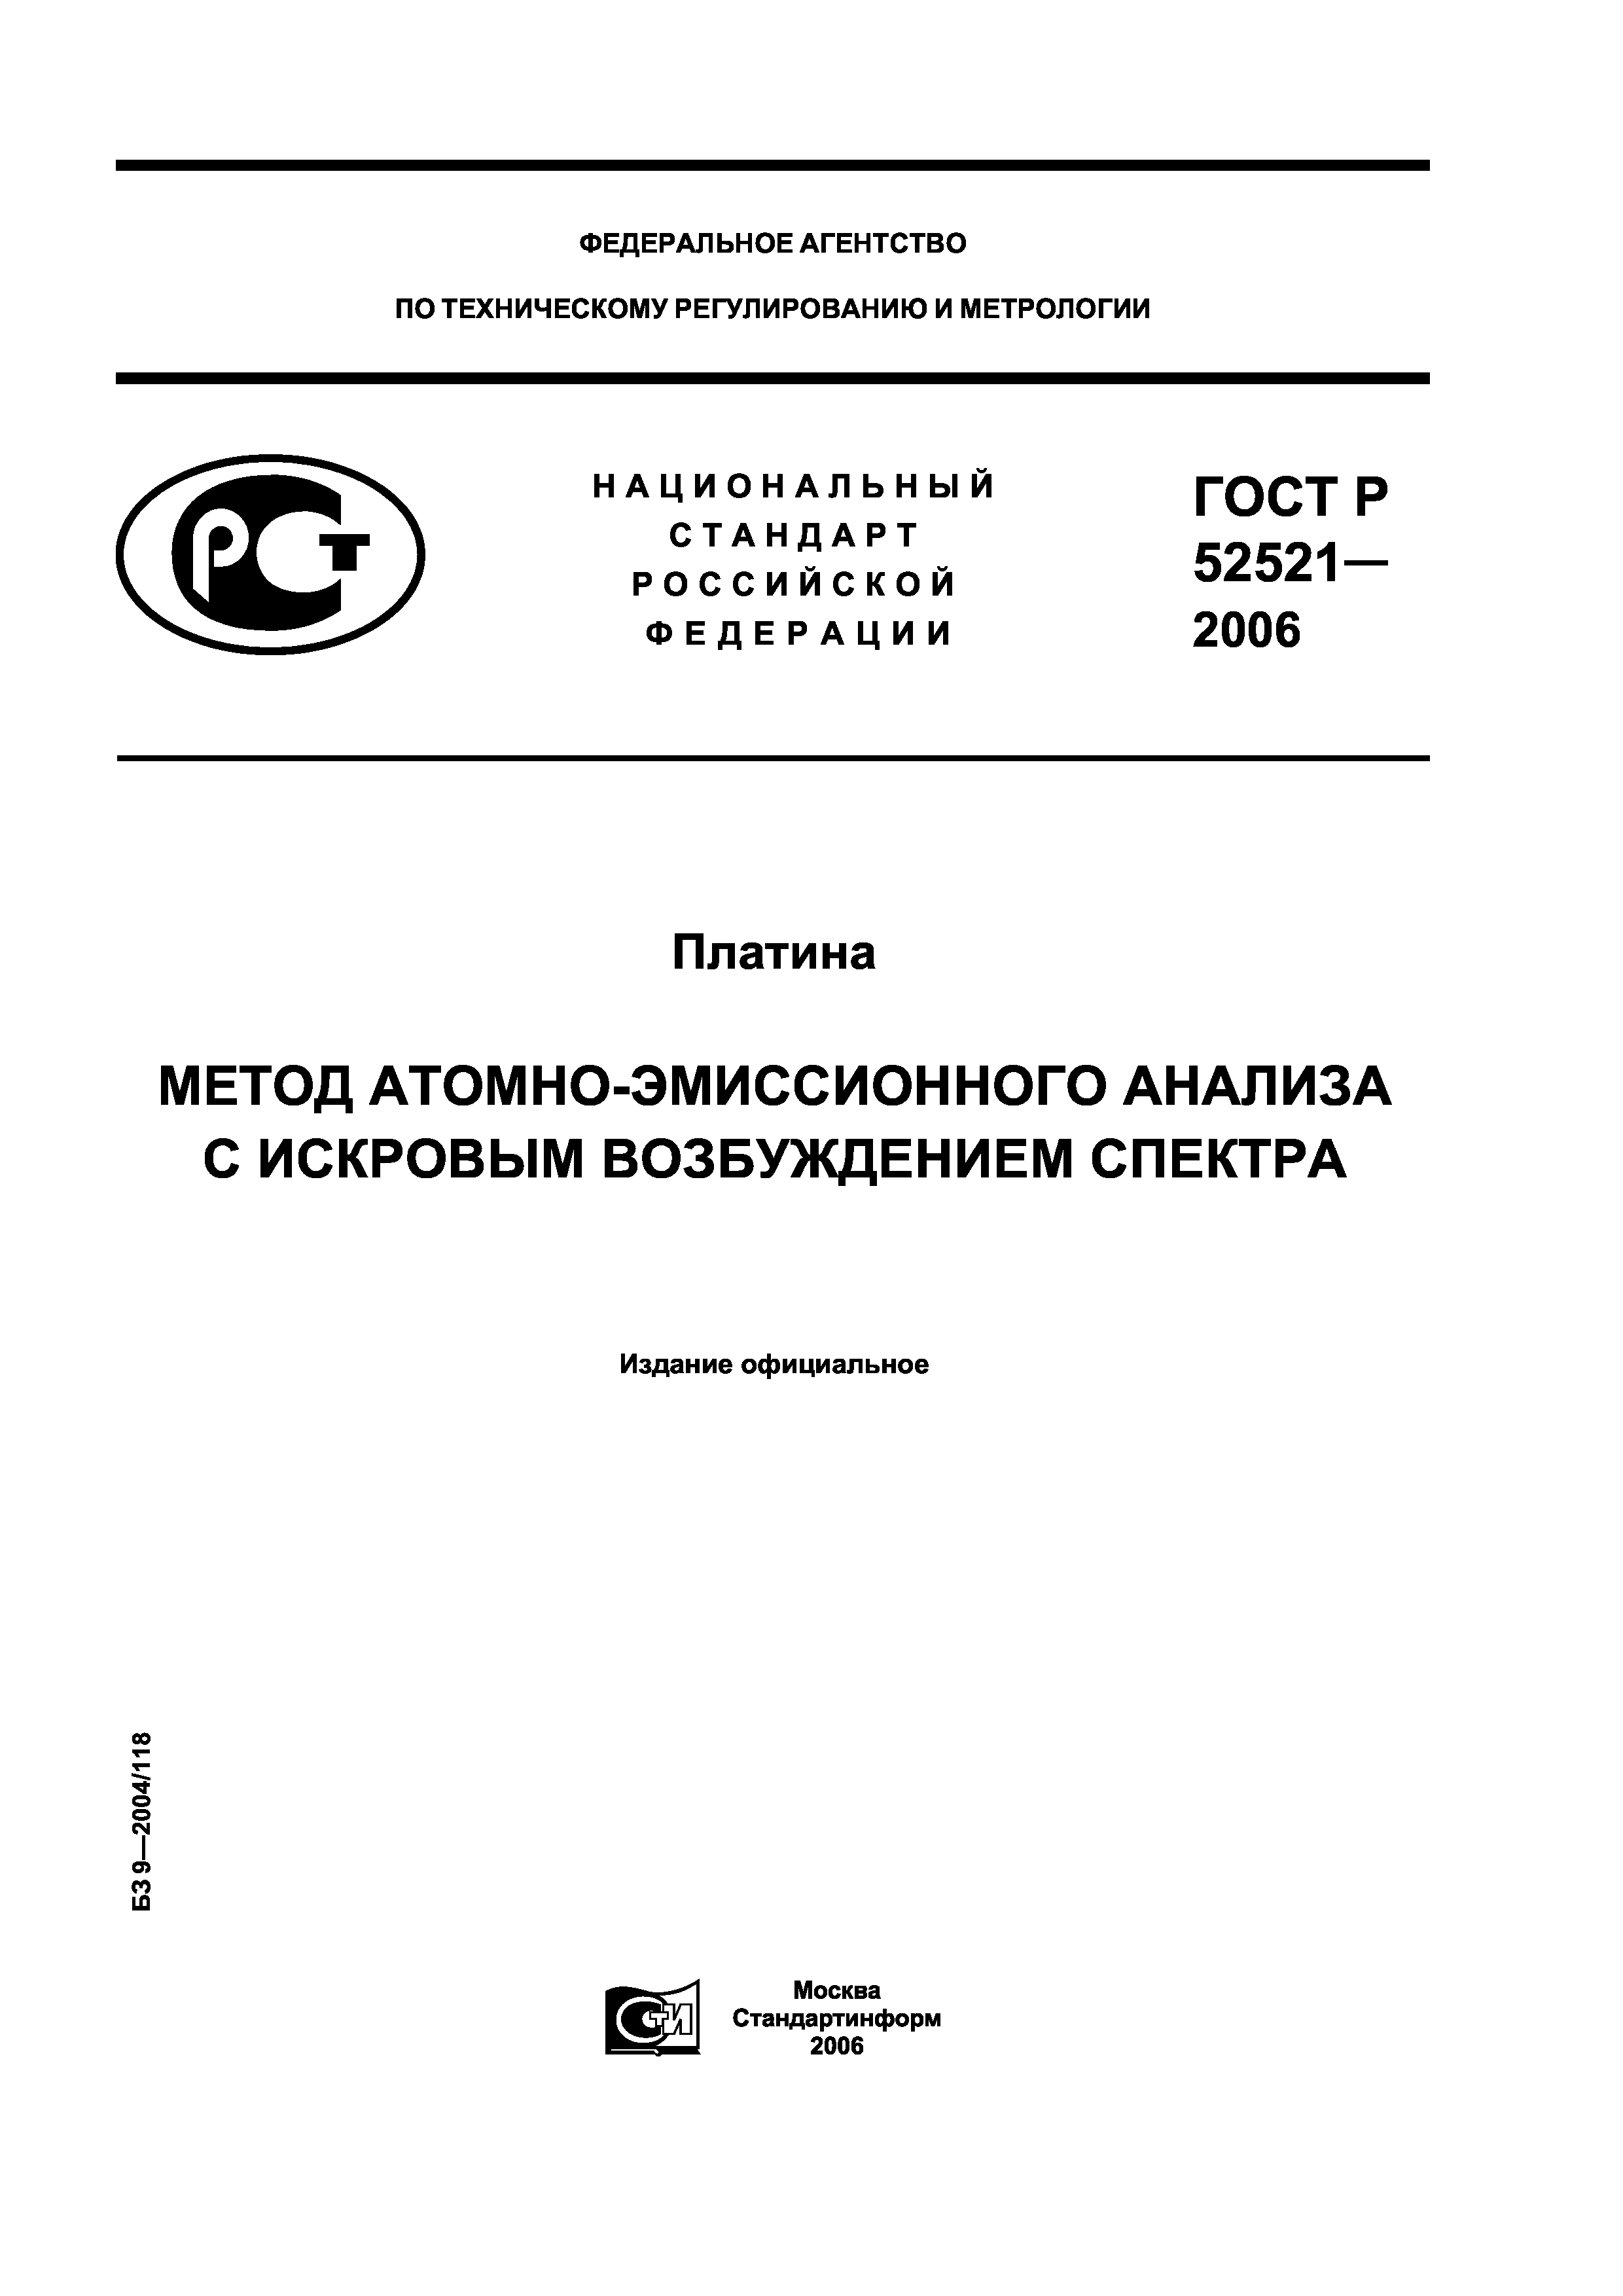 ГОСТ Р 52521-2006